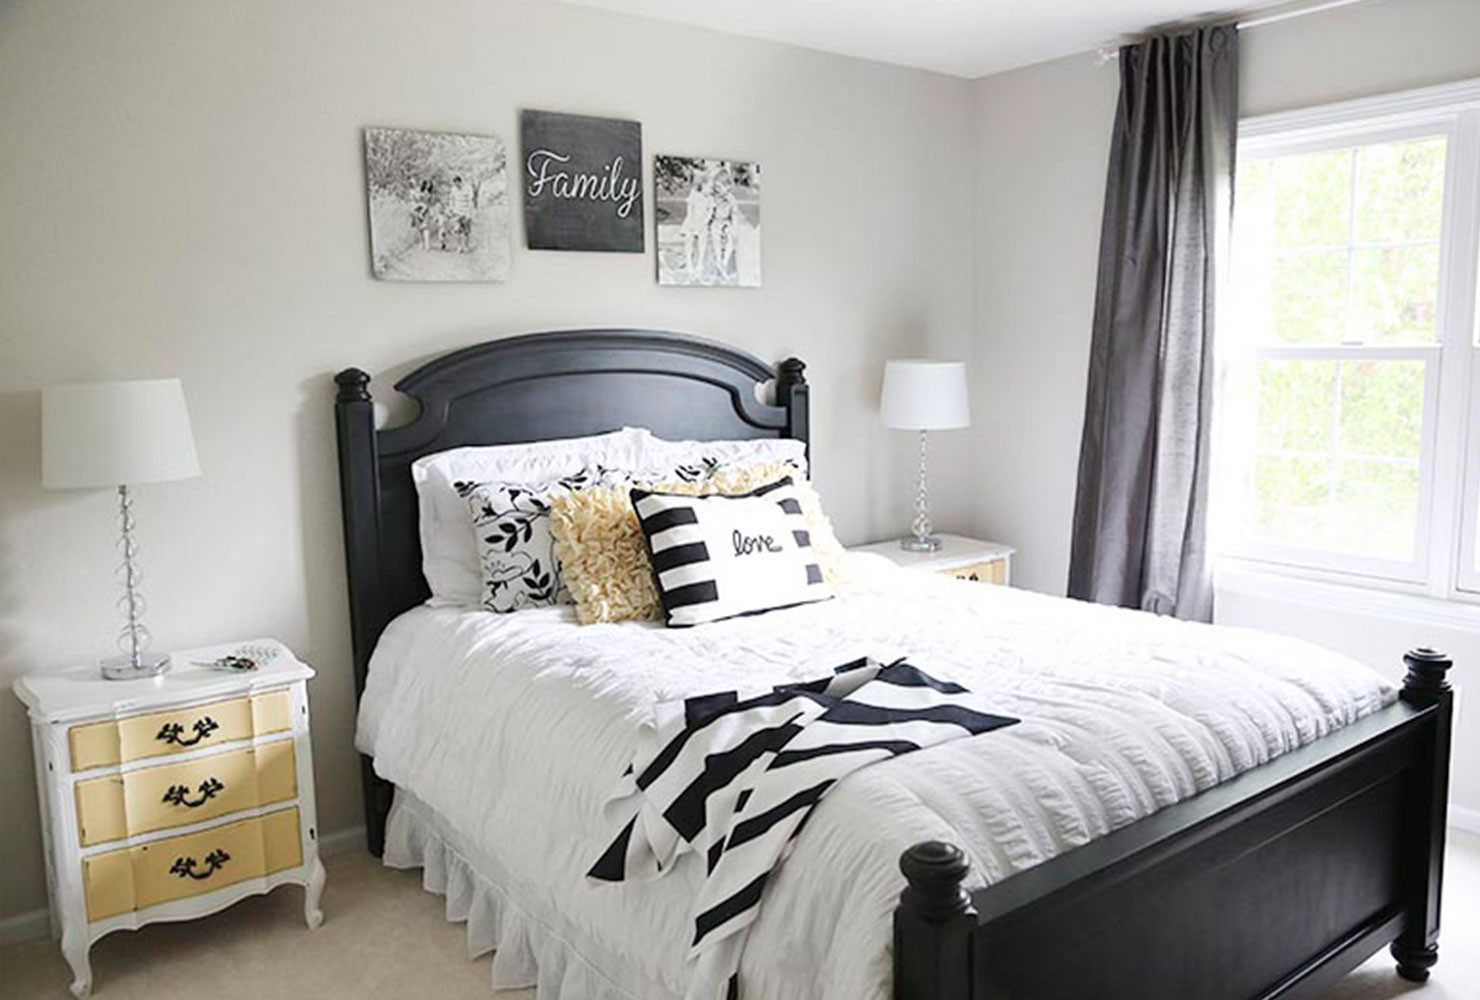 Bedroom DIY Decor
 55 DIY Room Decor Ideas to Decorate Your Home